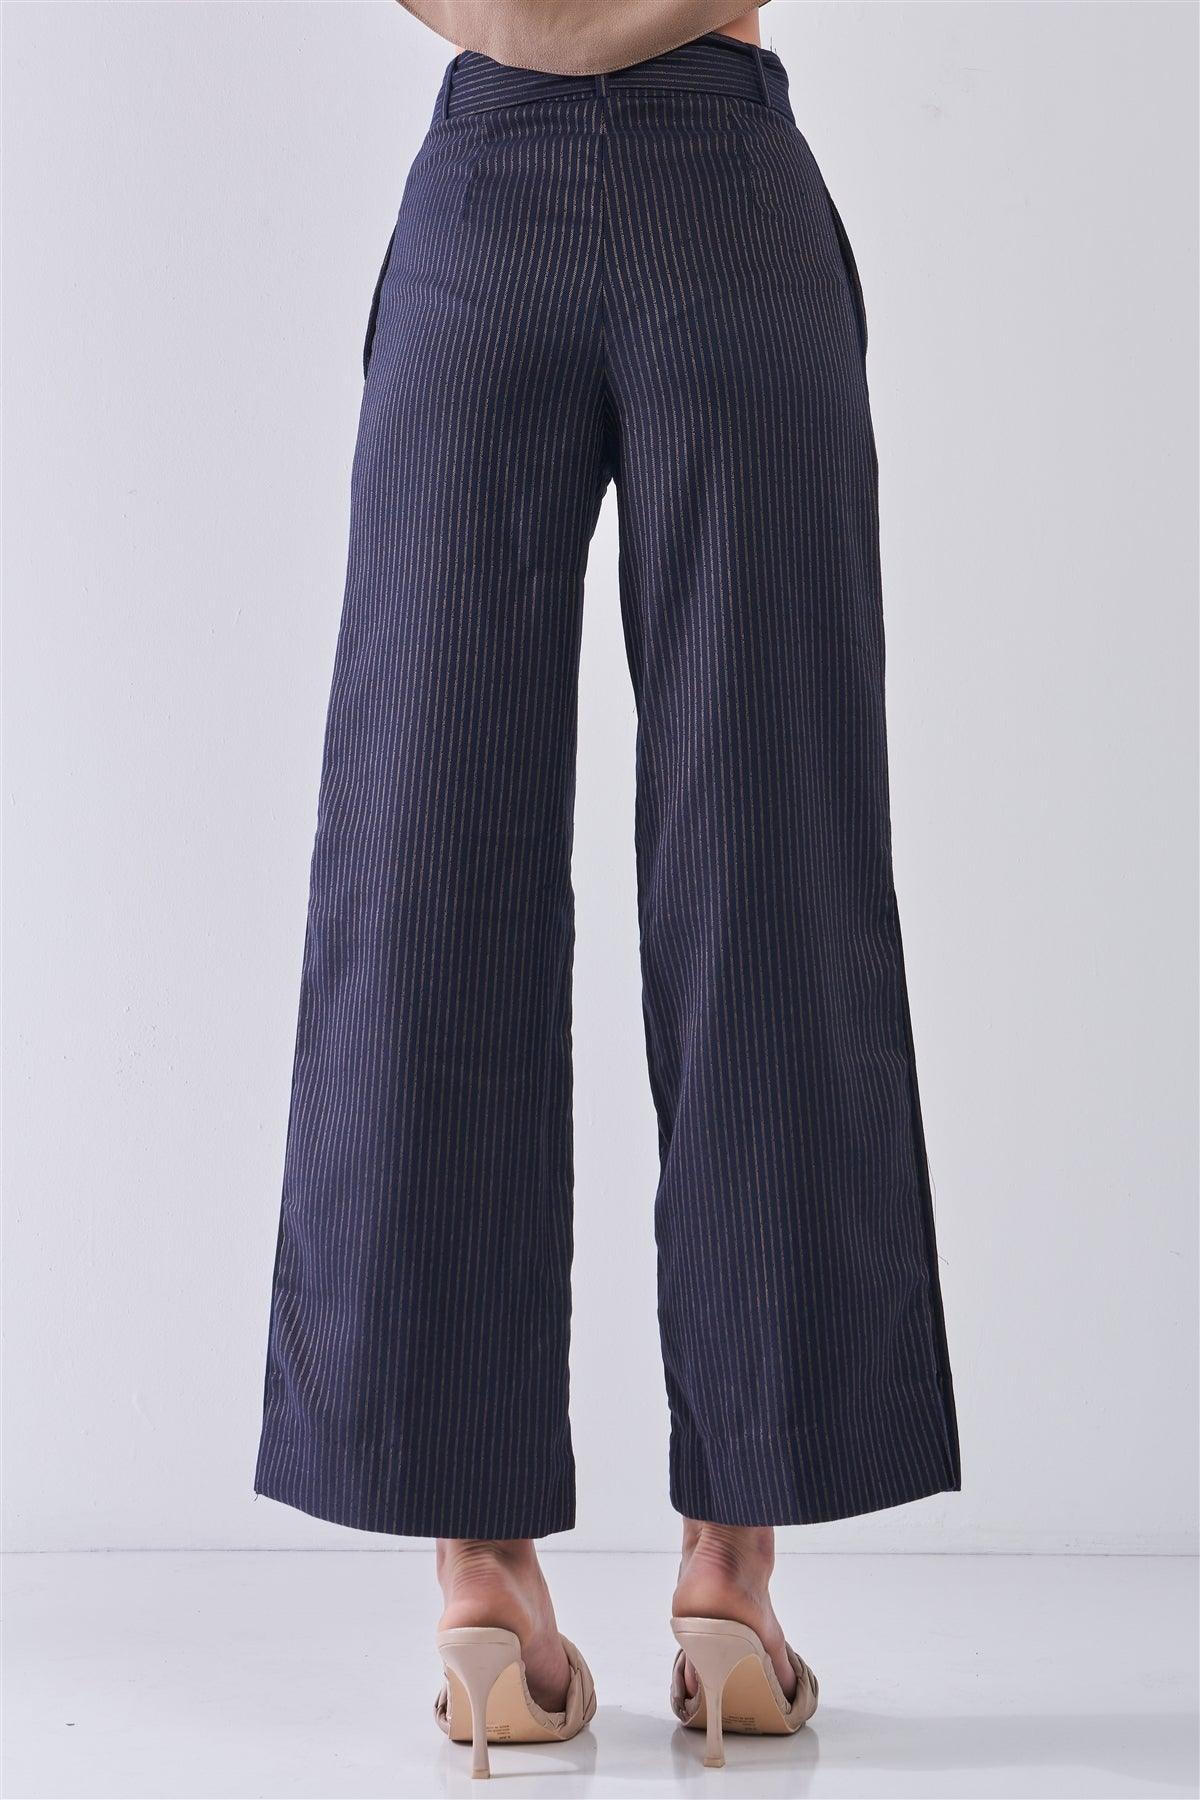 Navy & Gold Striped High Waist Detachable Self-Tie Belt Slit Sides Detail Wide Leg Pants /3-2-1